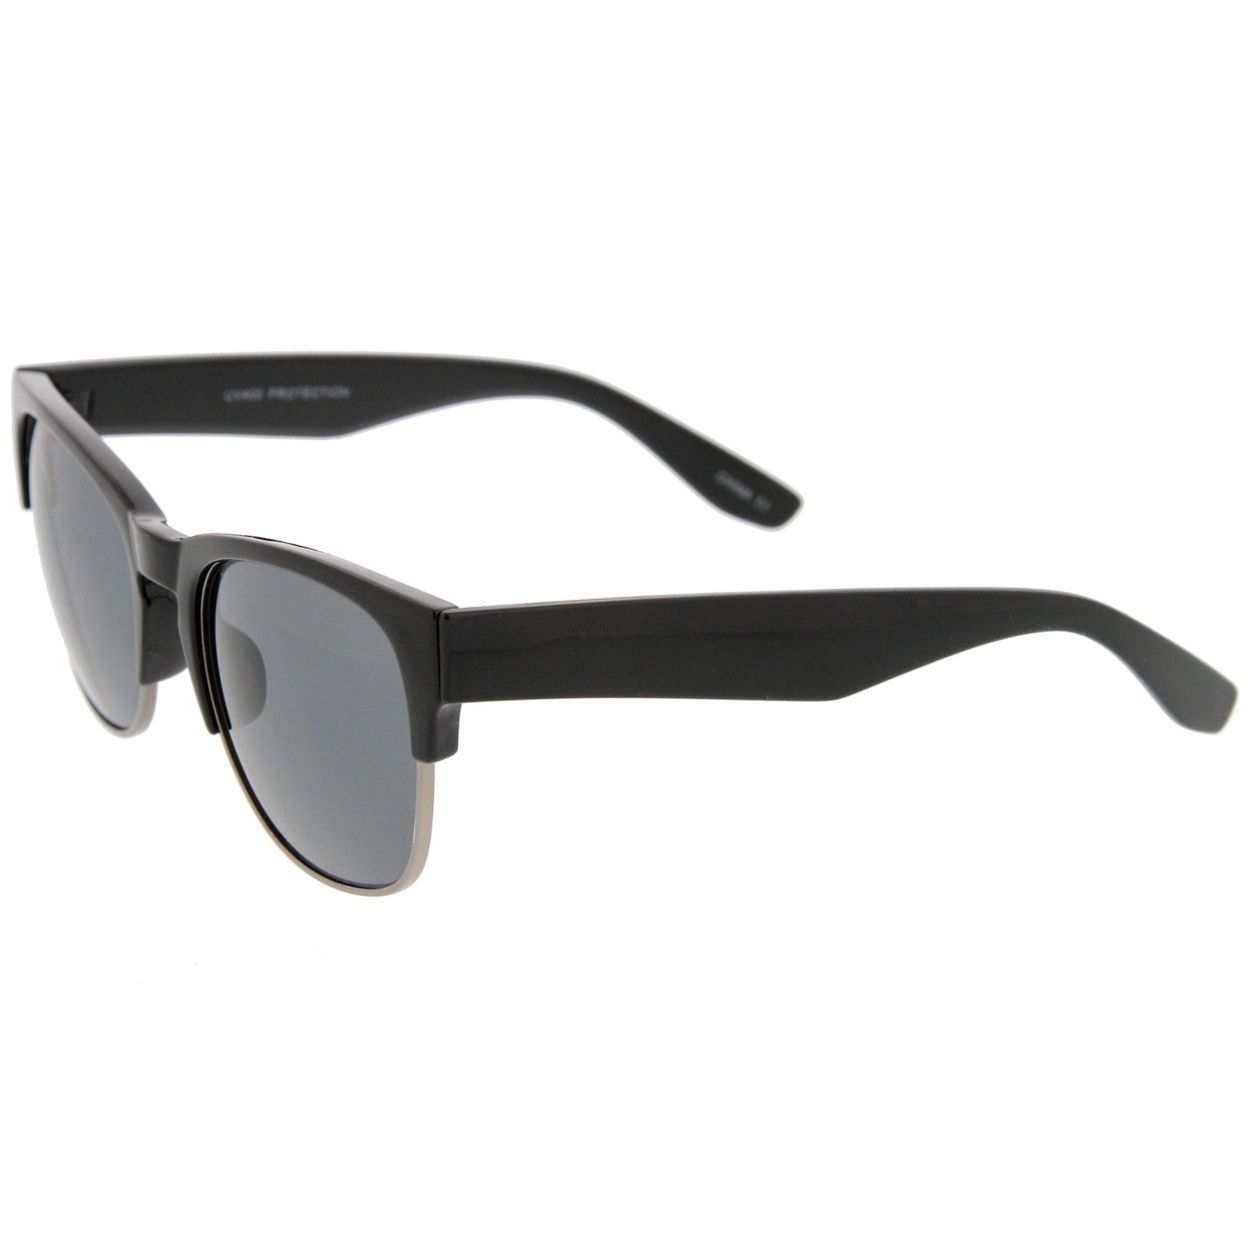 Contemporary Wide Temple Keyhole Nose Bridge Half-Frame Sunglasses 54mm - Shiny Black-Black / Smoke